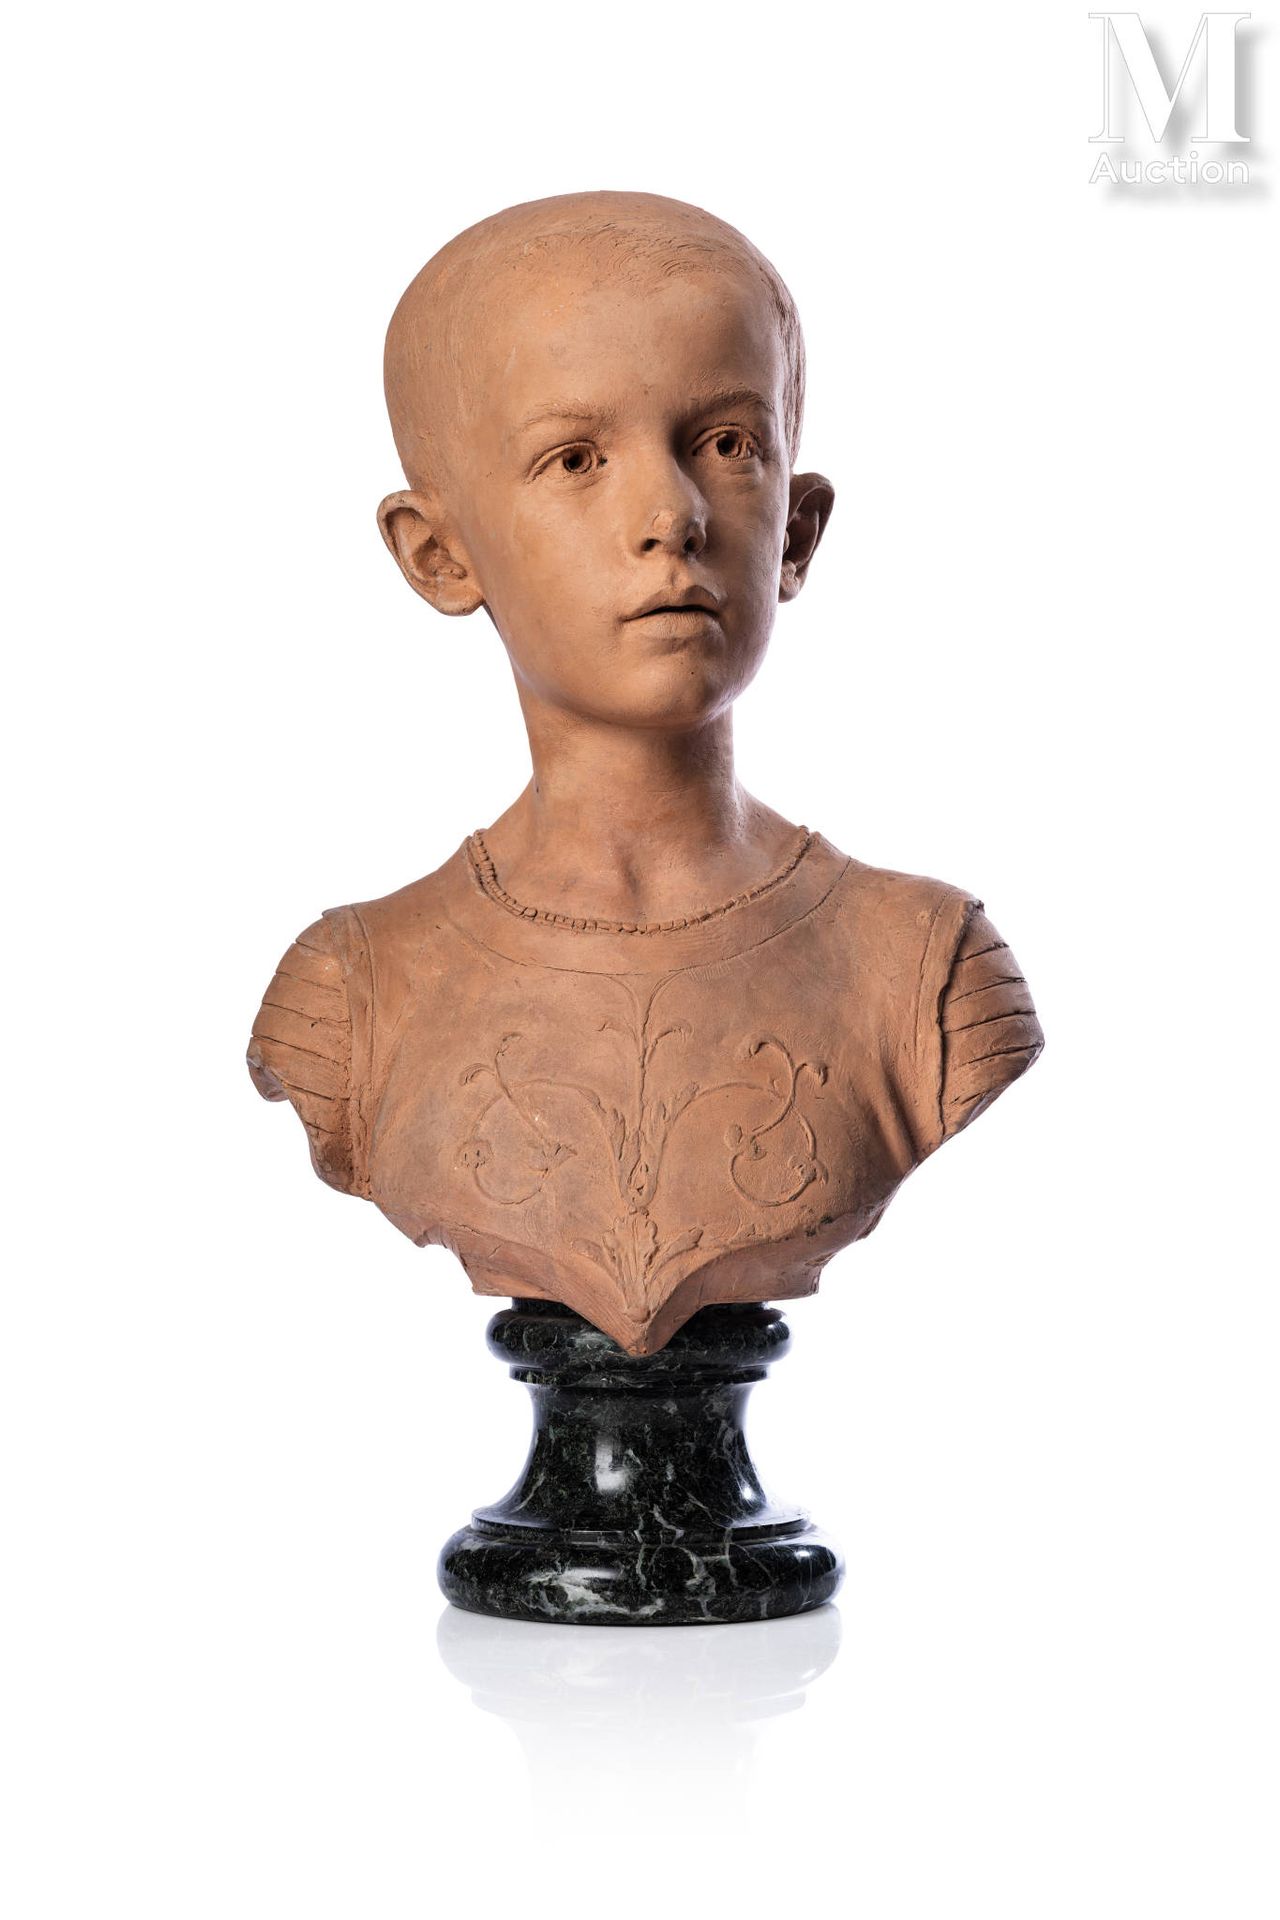 Jean GAUTHERIN (1840-1890), sculpteur. 儿童
身着文艺复兴时期服饰的男孩肖像。
黑色大理石基座上的半身陶俑。 
左后侧有签&hellip;